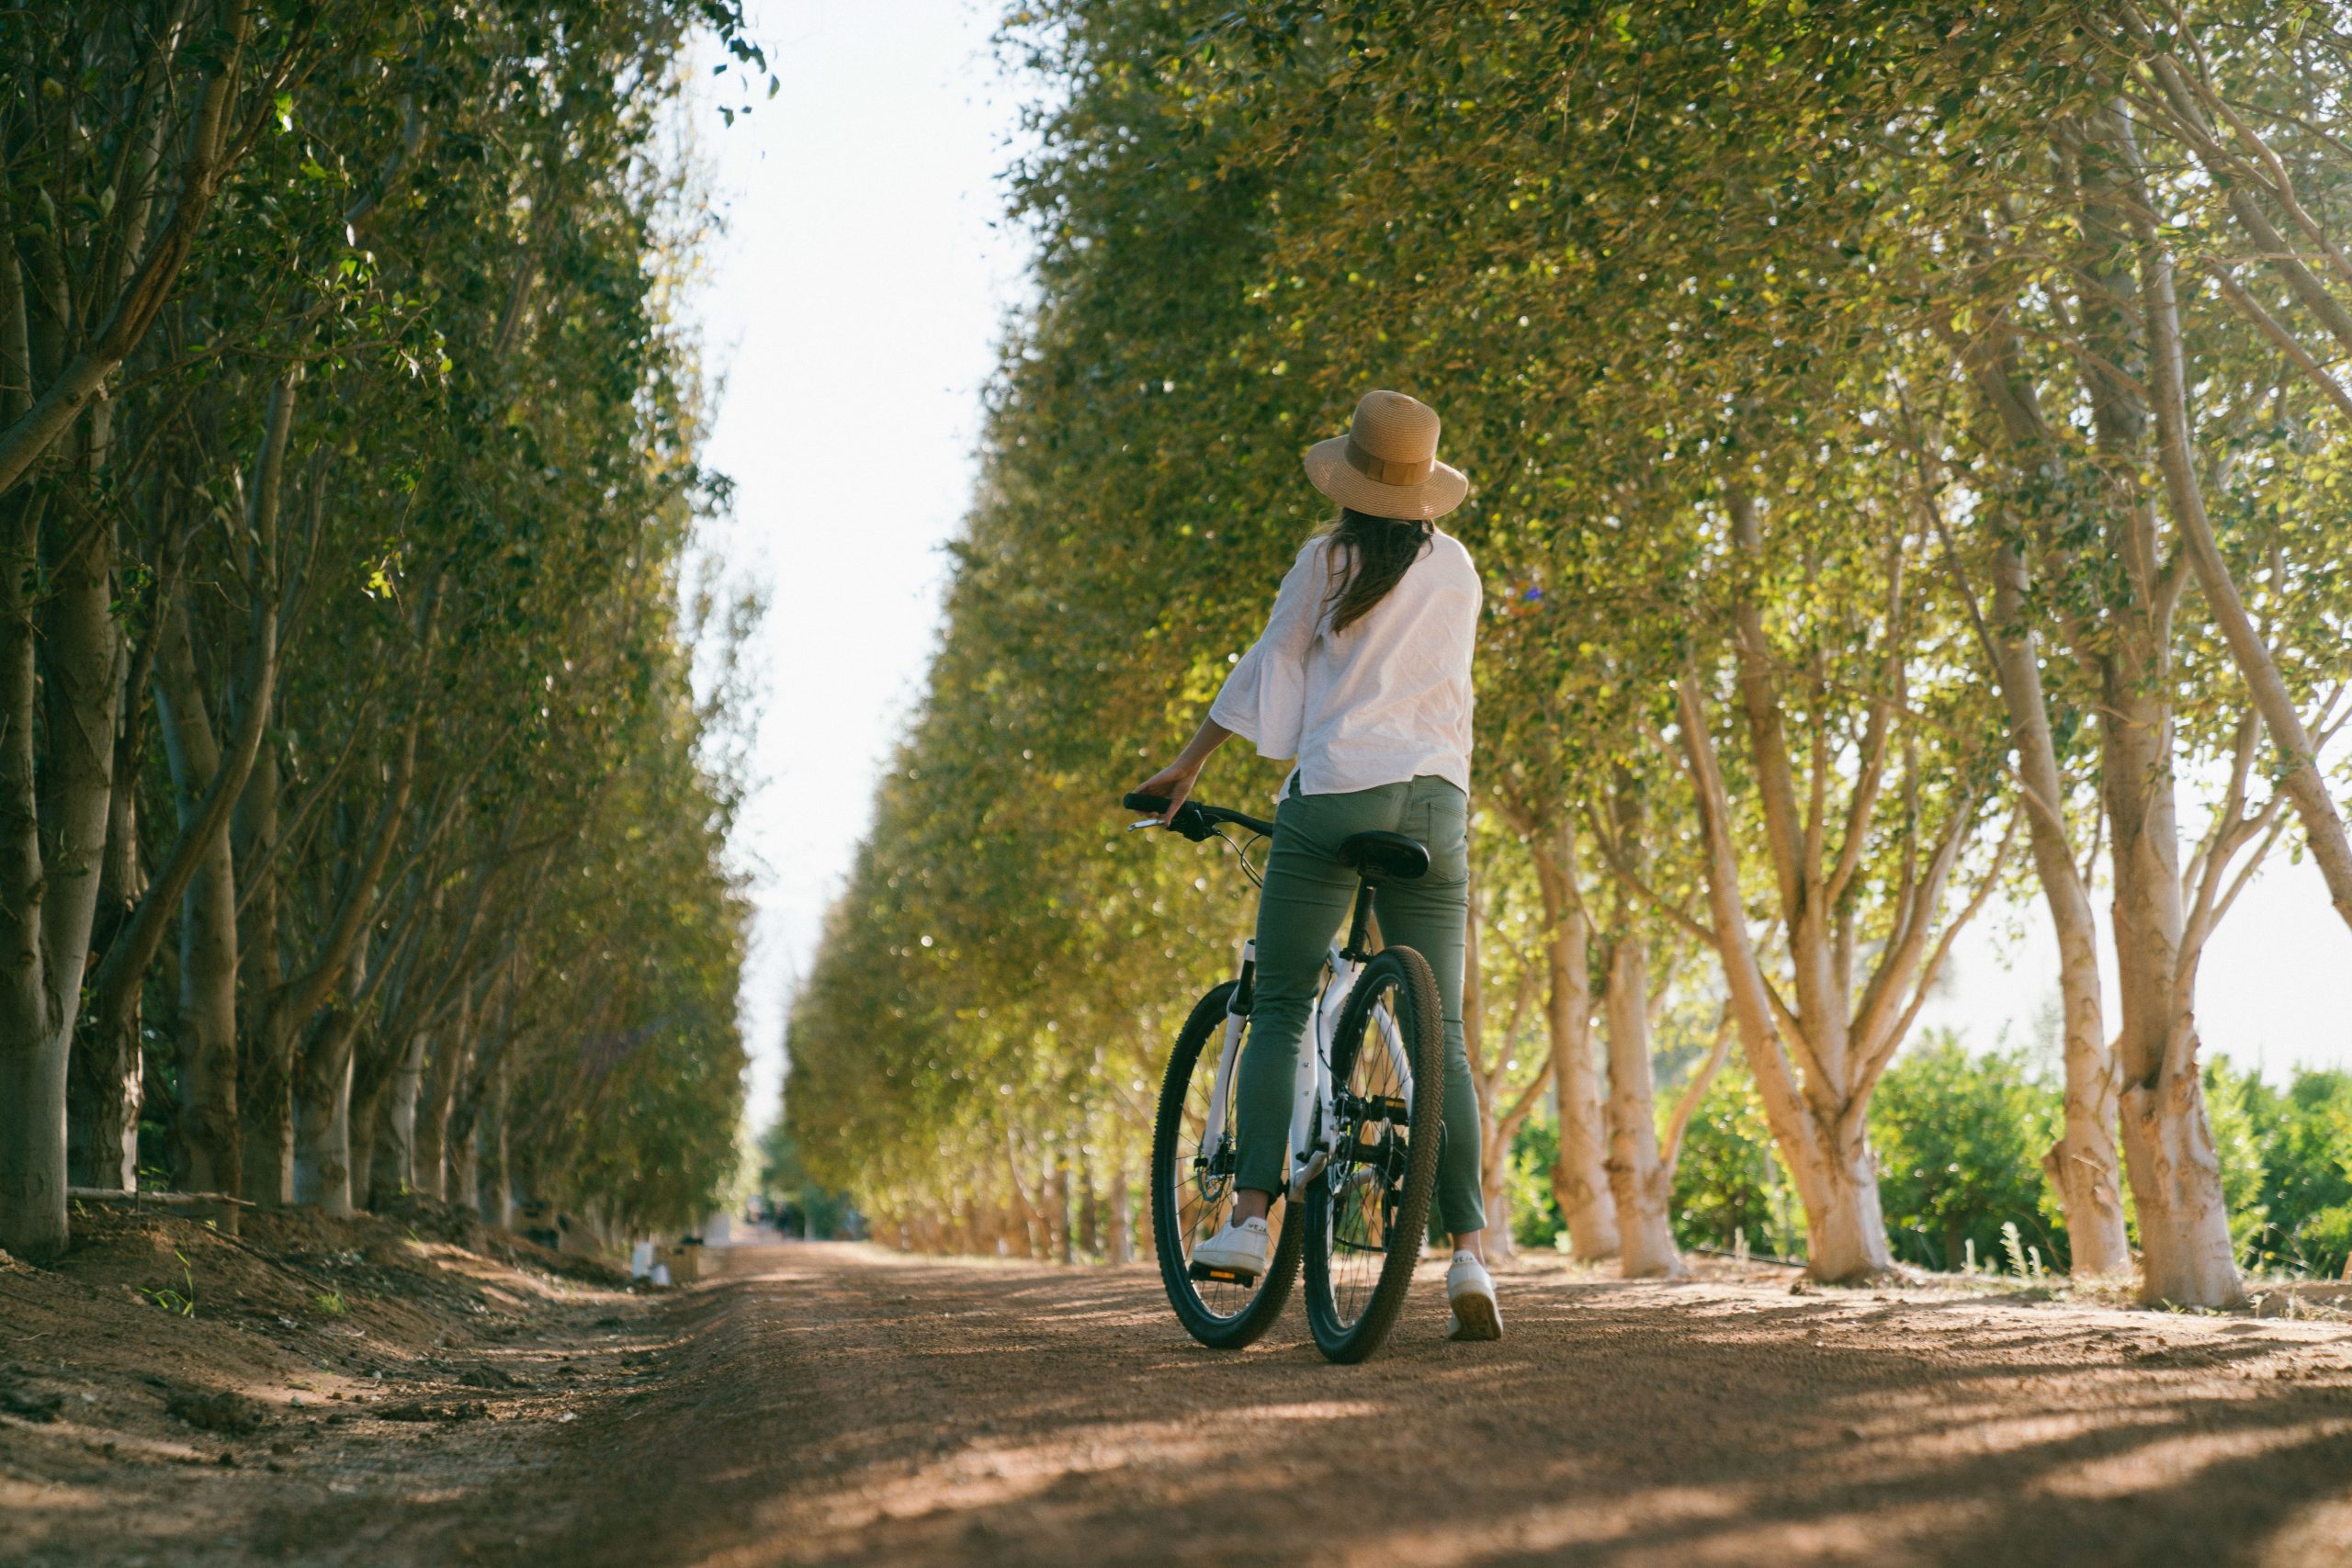 A woman riding a bike down a dirt road.